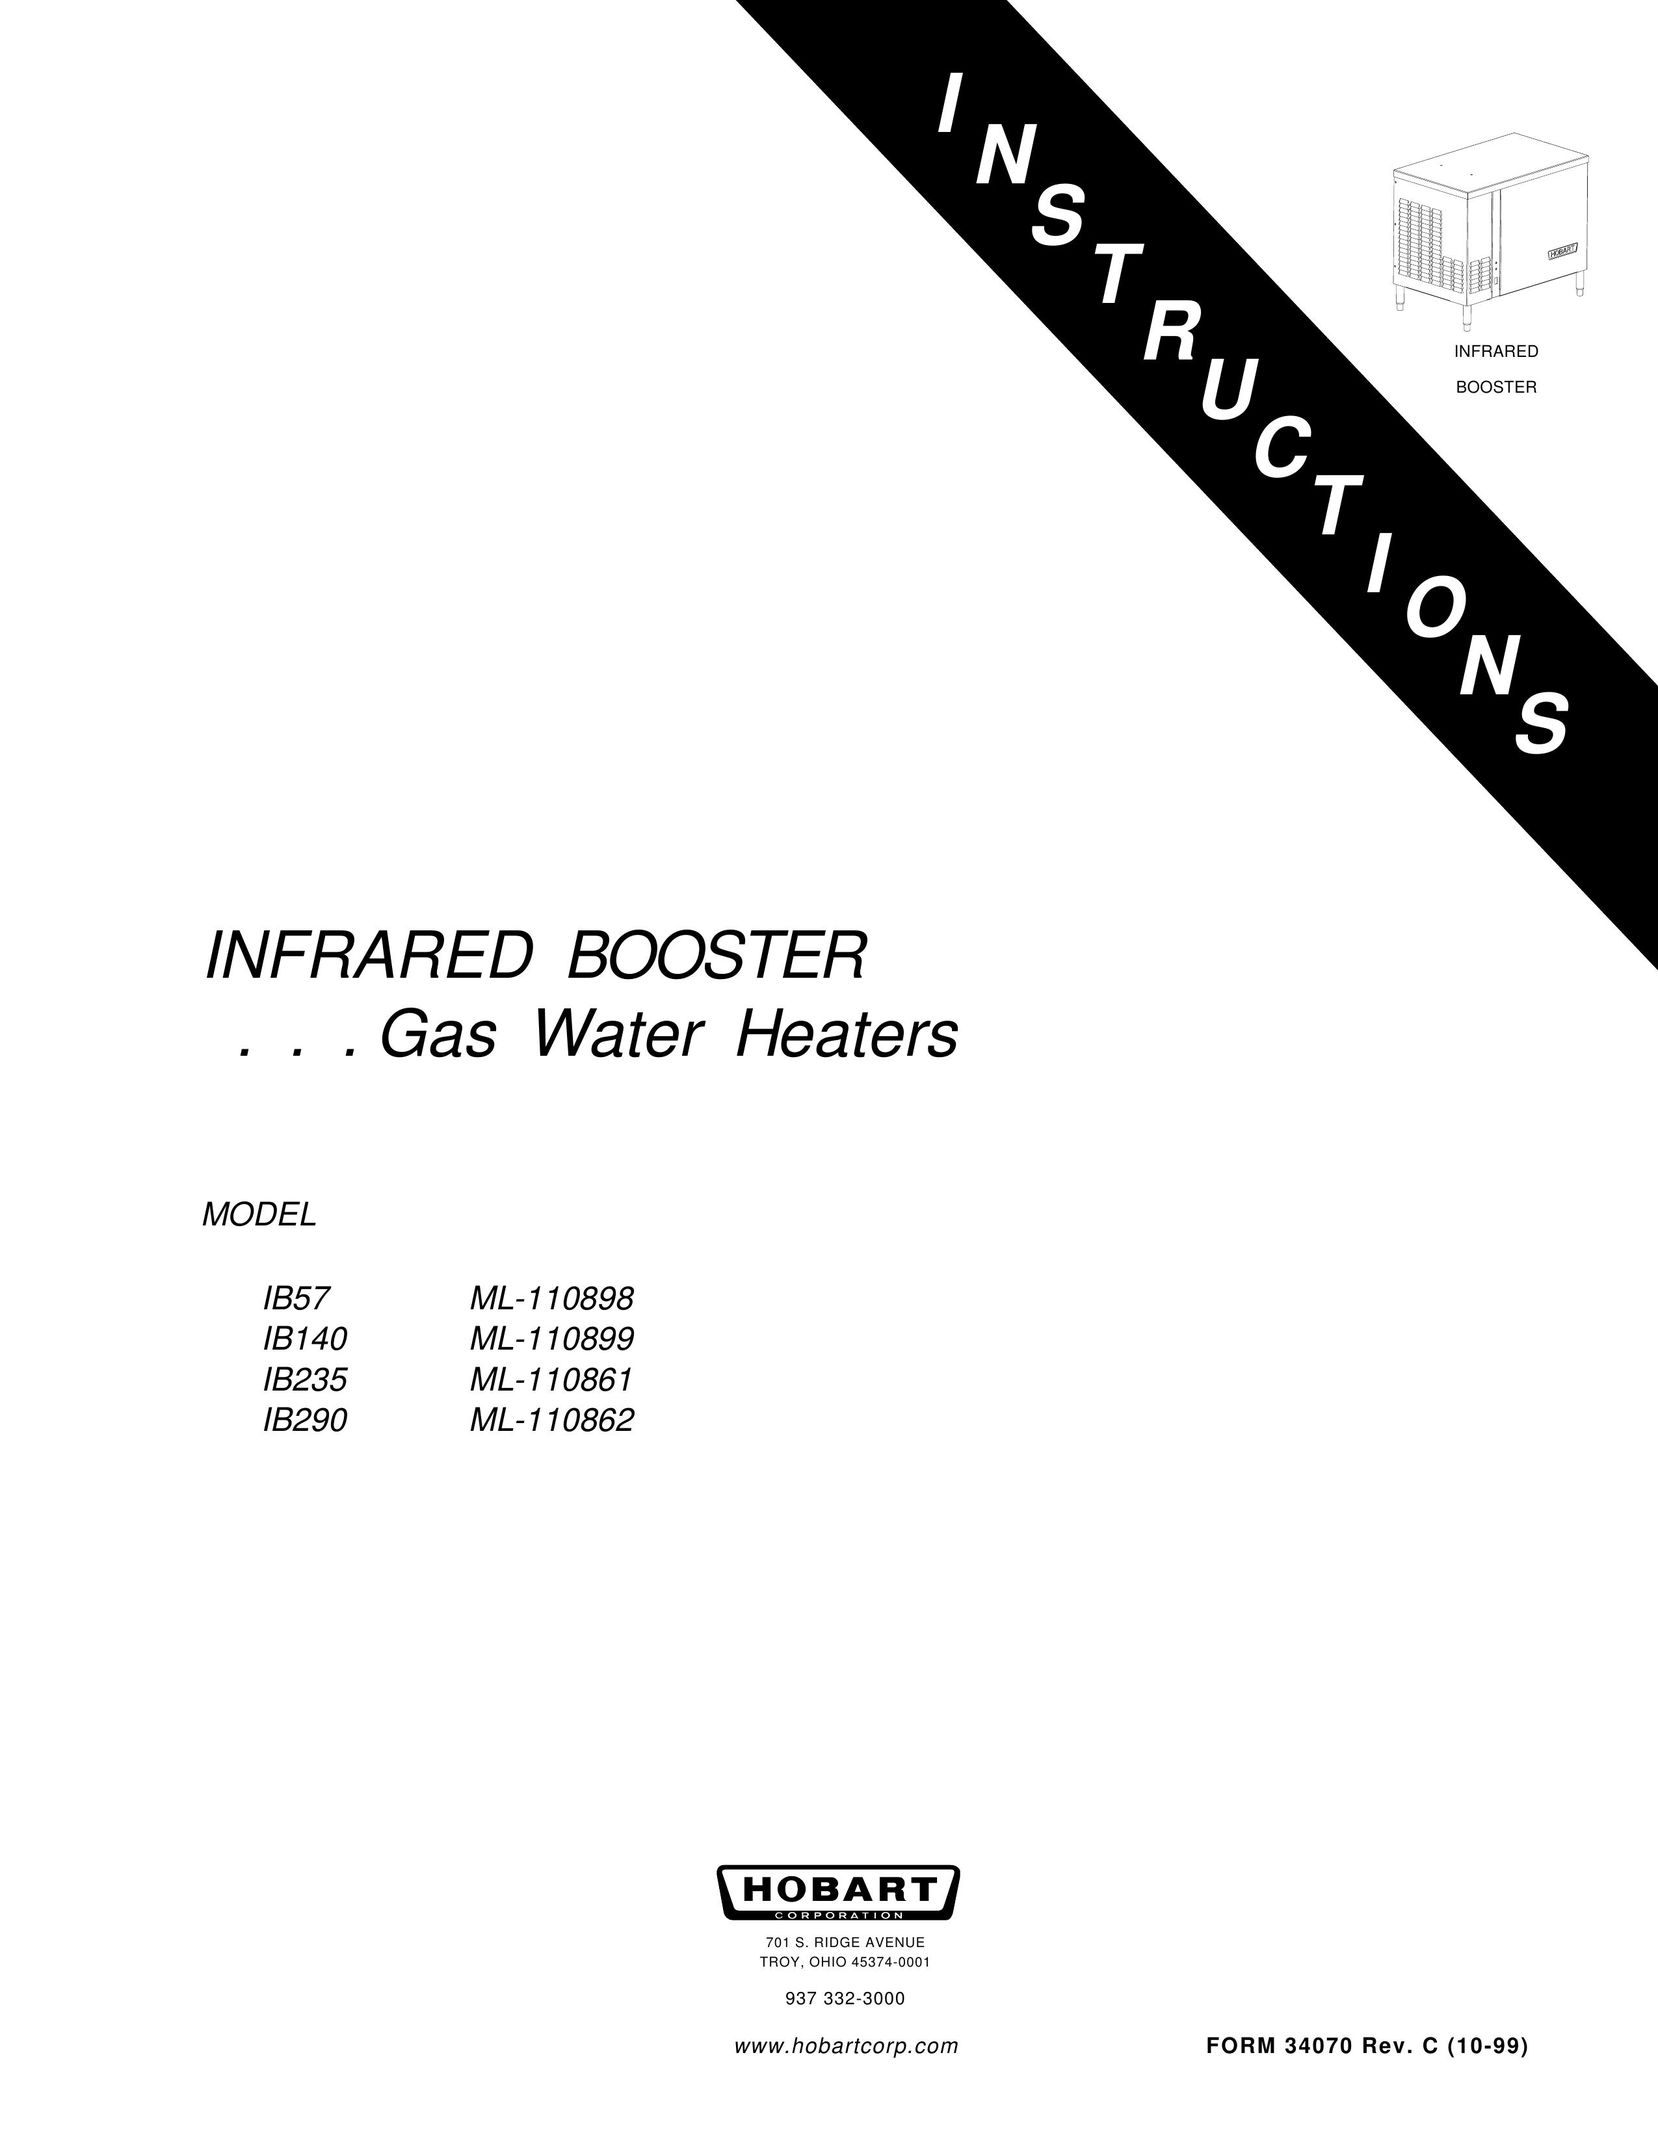 Hobart IB140 ML-110899 Water Heater User Manual